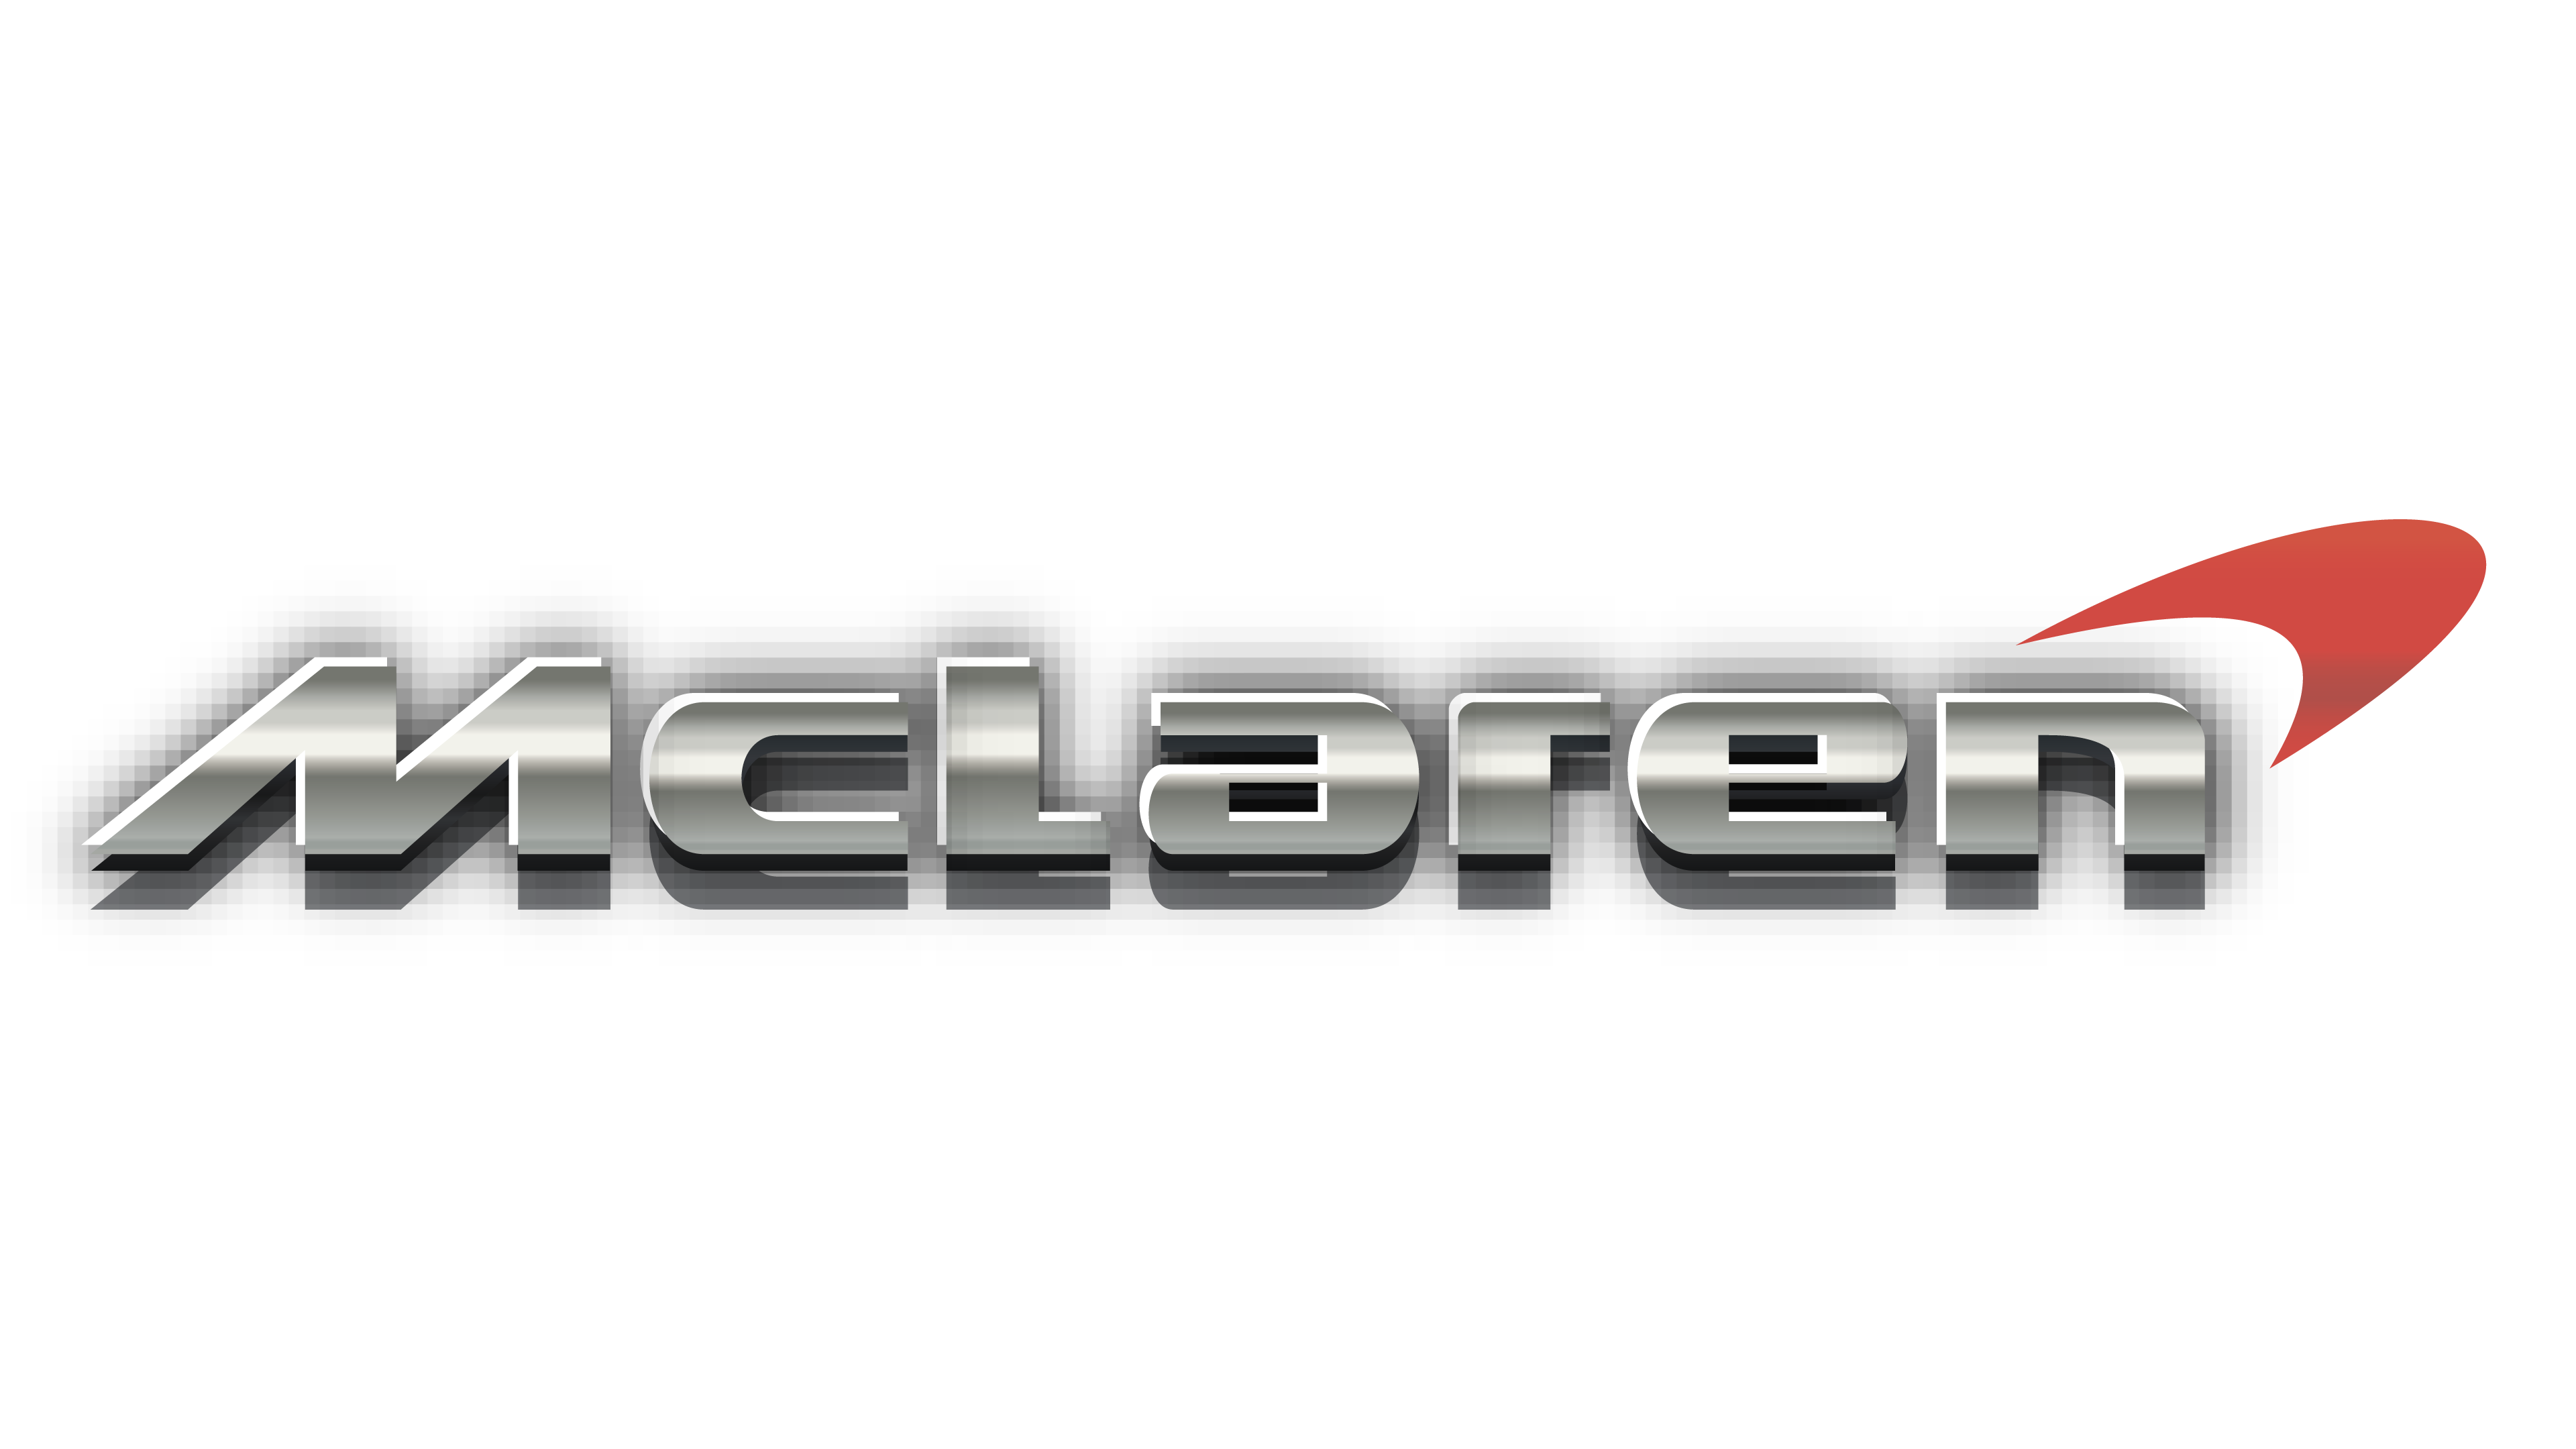 Mclaren – Logos Download